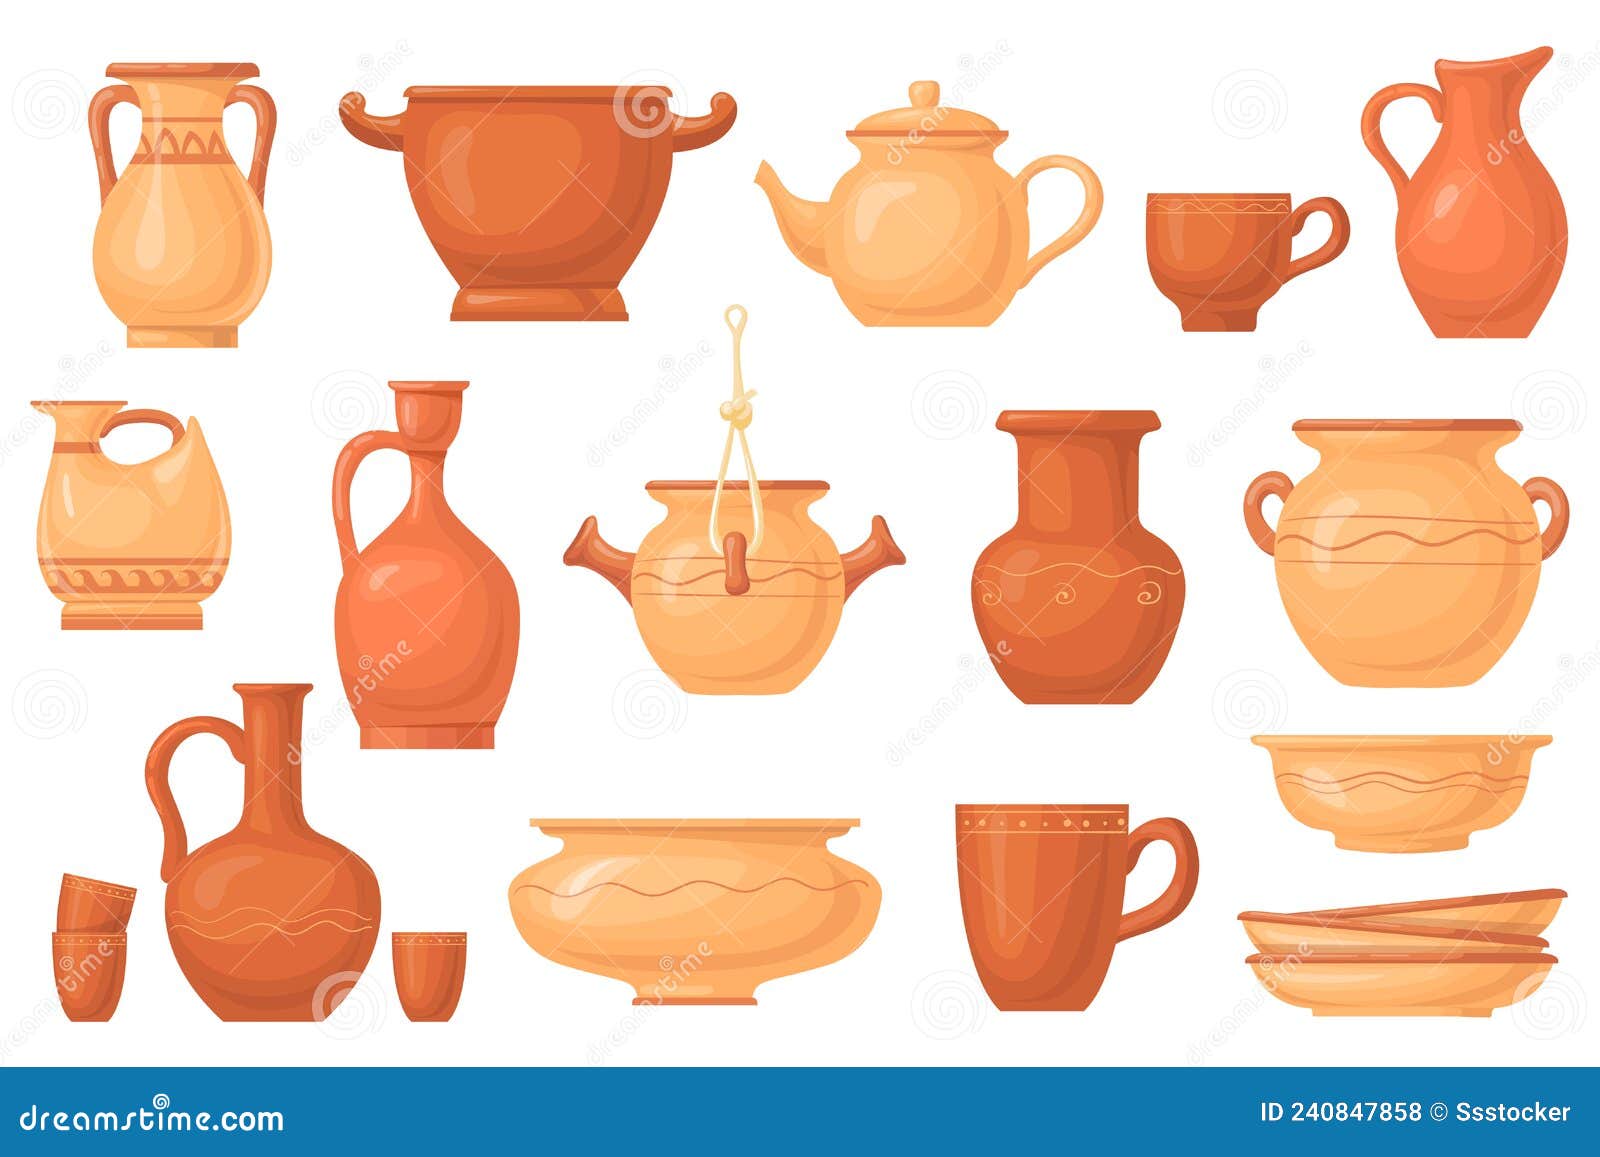 cartoon clay crockery. antique ceramico utensils, brown earthenware pot dish vessels cup jug bowl, ancient ceramic